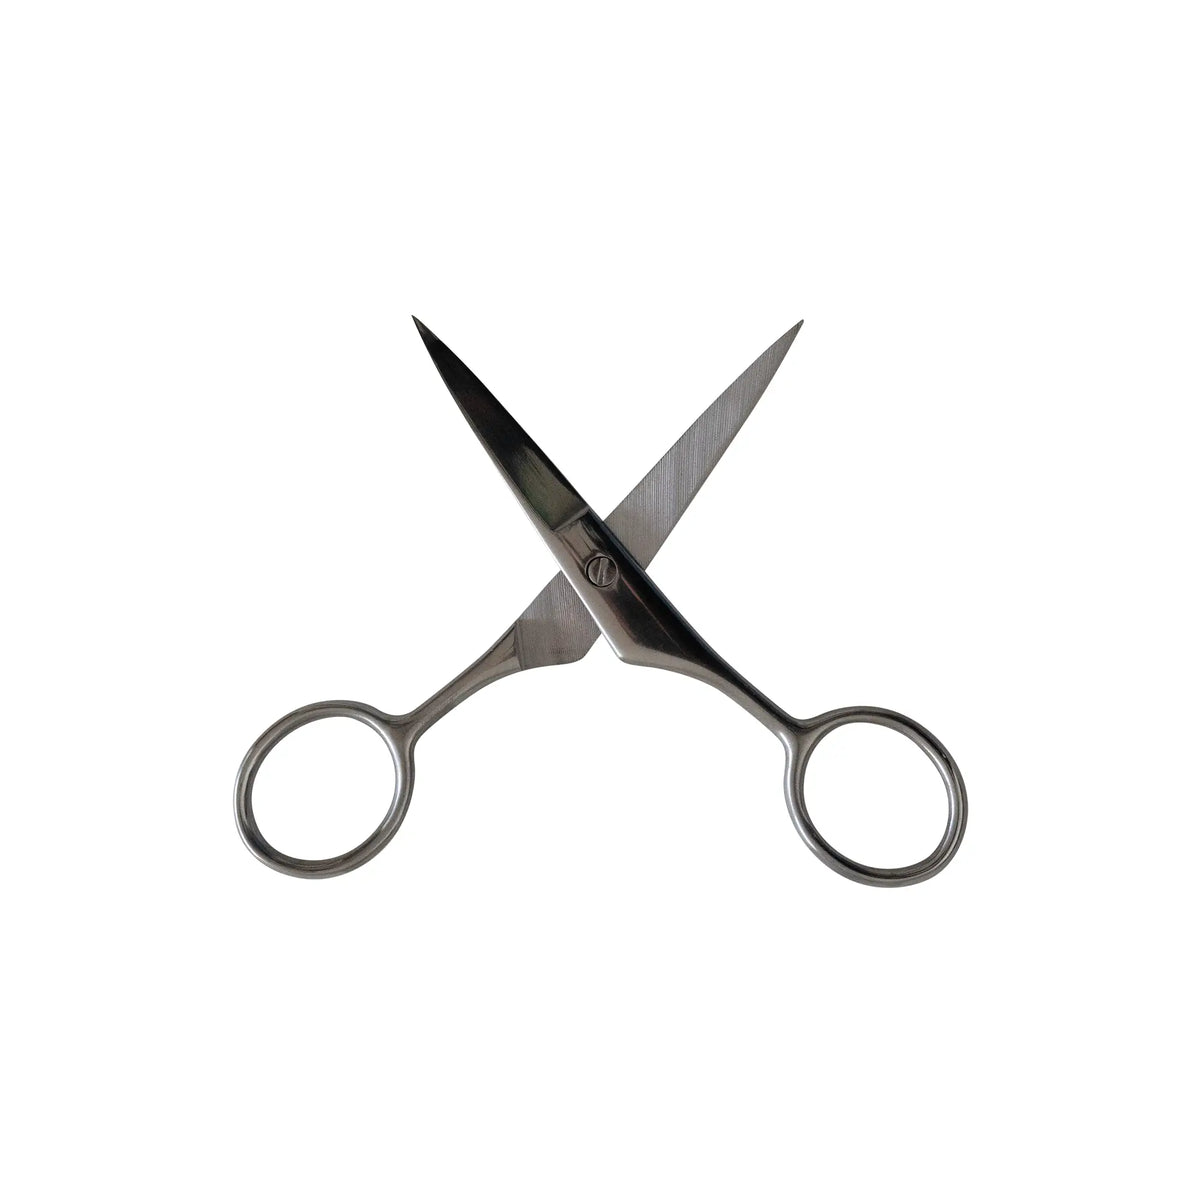 Pro Sharp Trimming Scissors - KESLEY